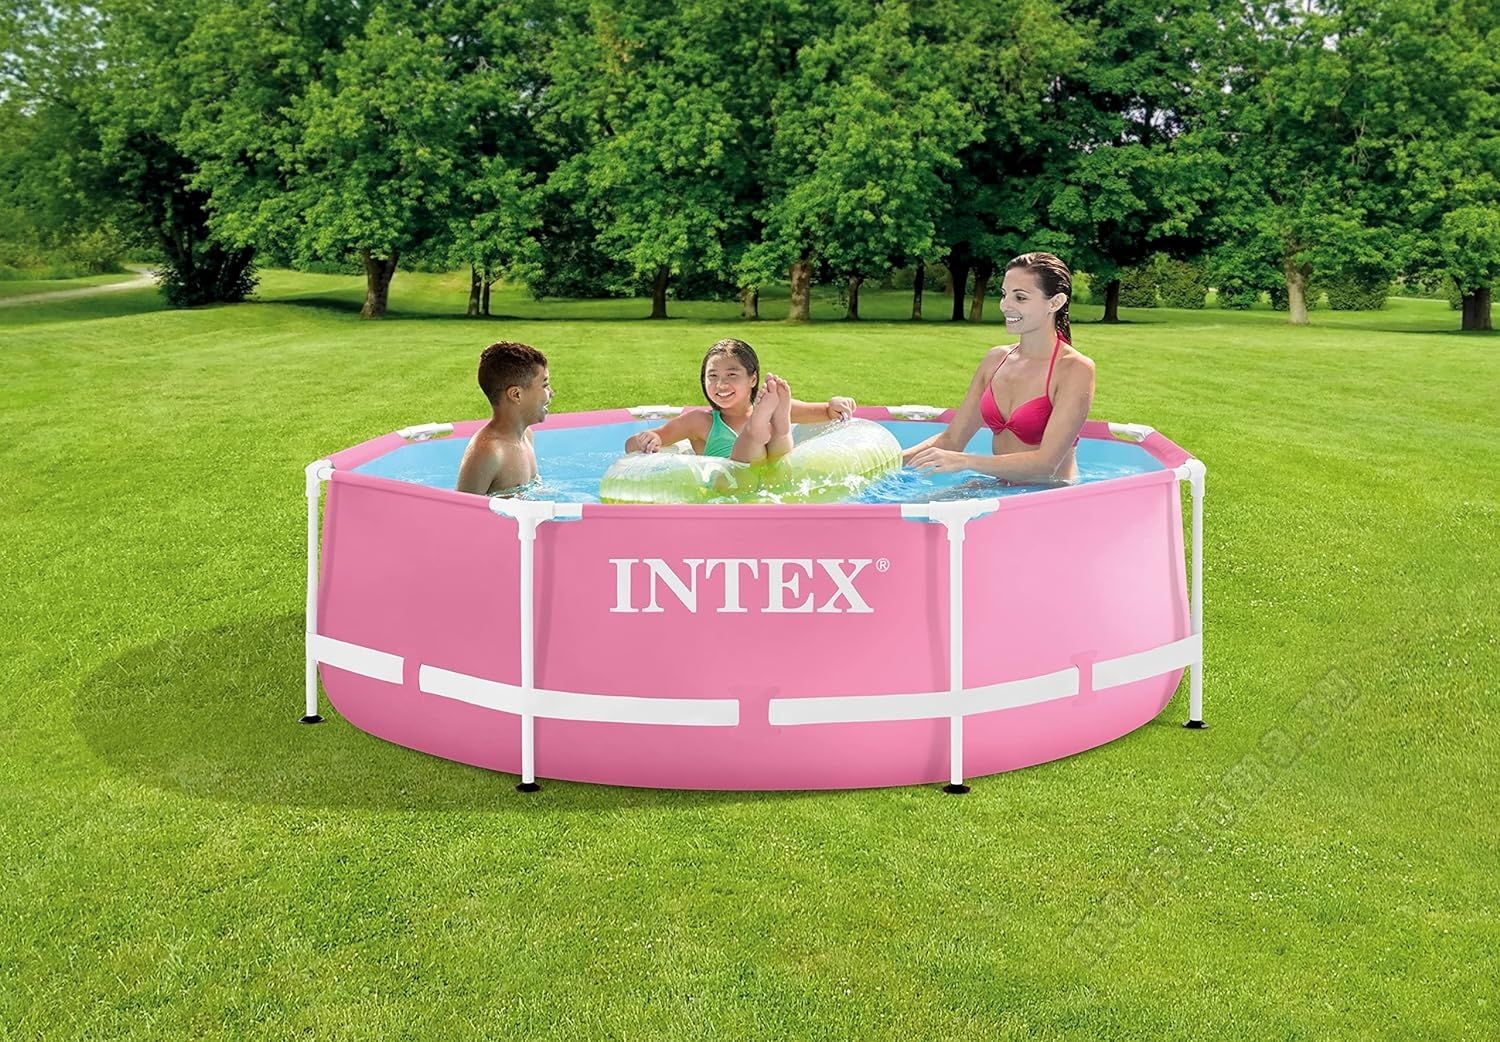 28292 Каркасный бассейн INTEX Pink Metal Frame (круг) 2.44 х 0.76 м ; артикул 28292 диаметр 2.44 высота 0.76  